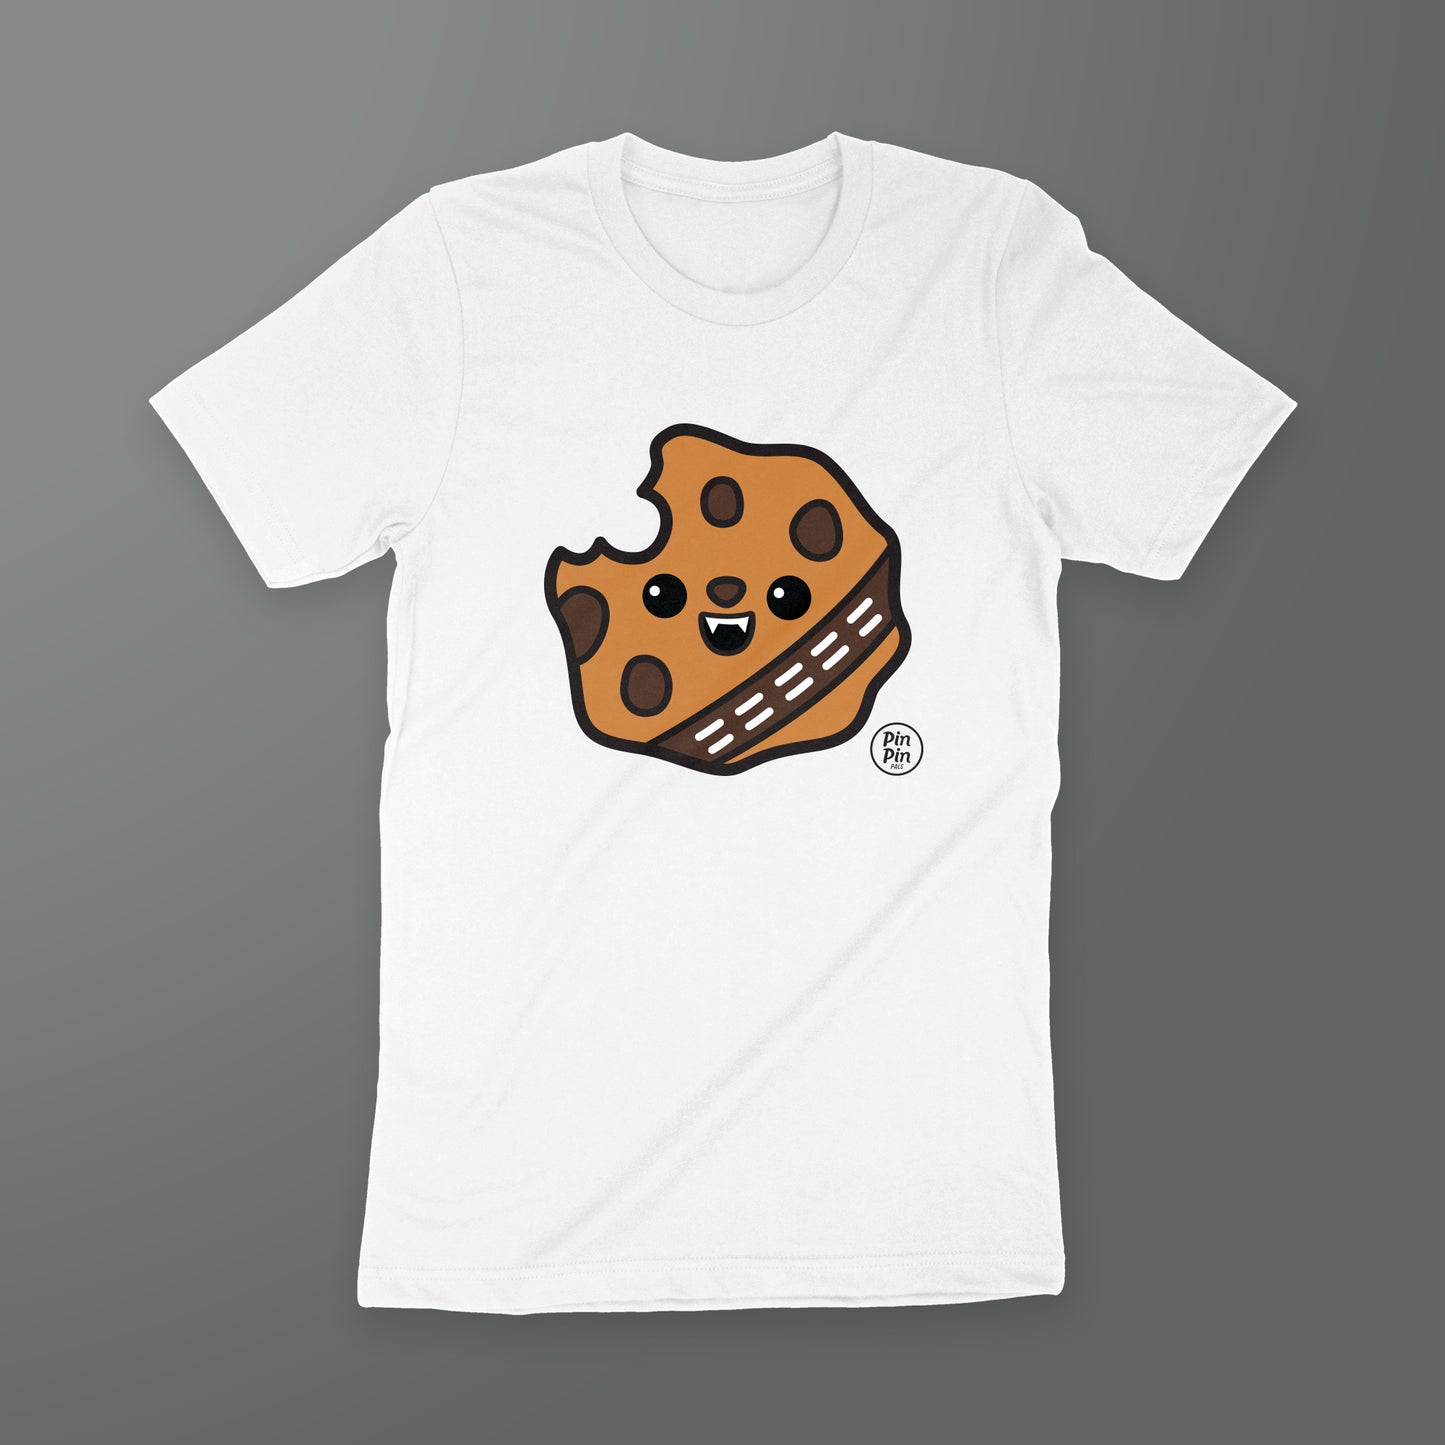 Wookie Cookie - Adult Unisex T-shirt